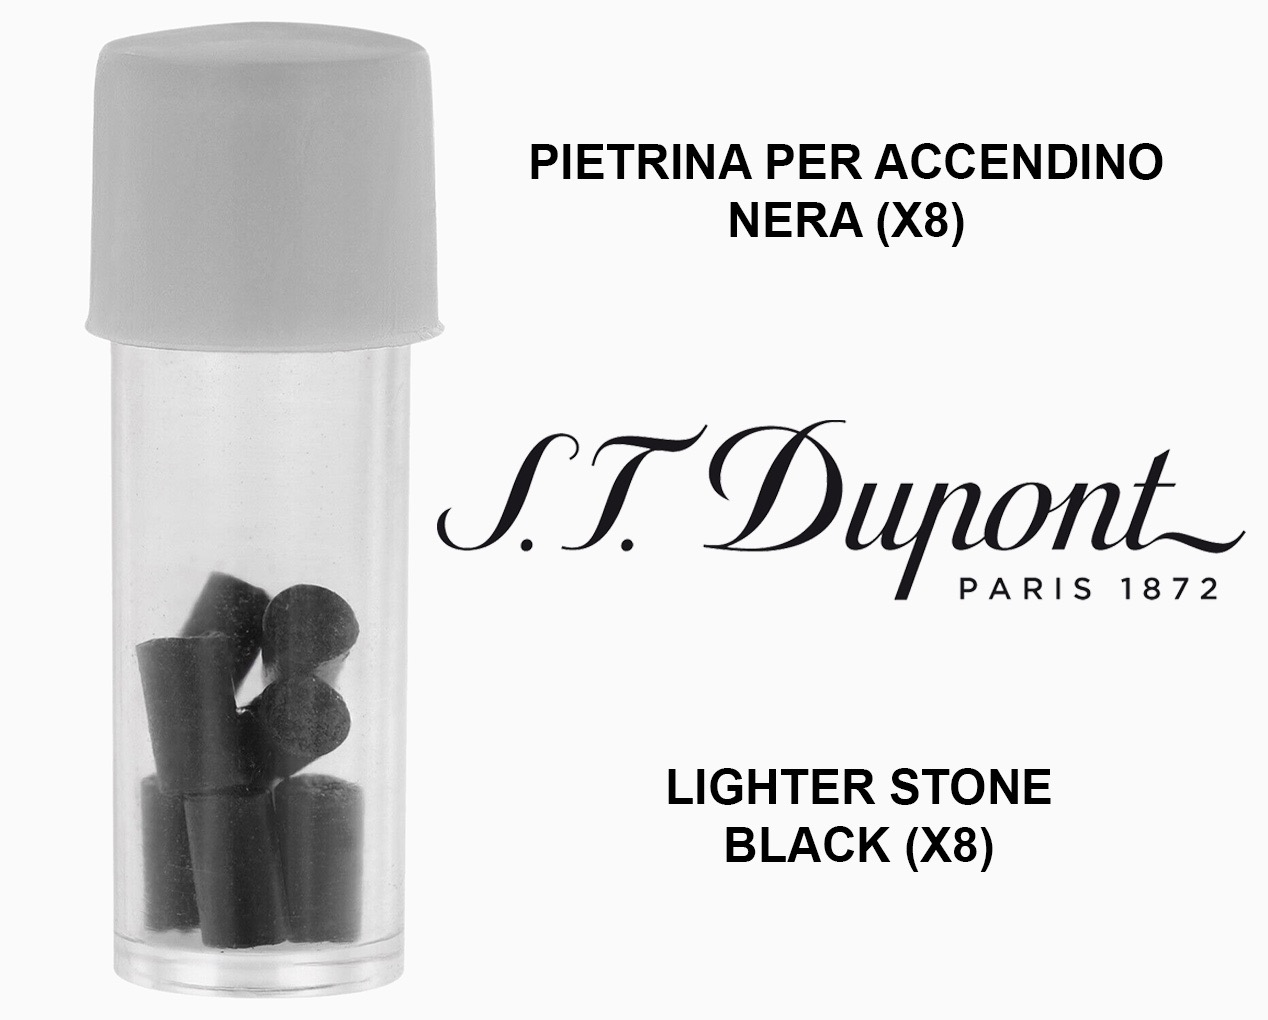 S.T. DUPONT BLACK FLINTS PIETRINA NERA RICAMBIO ACCENDINI LIGHTER LIGNE 1-2  601